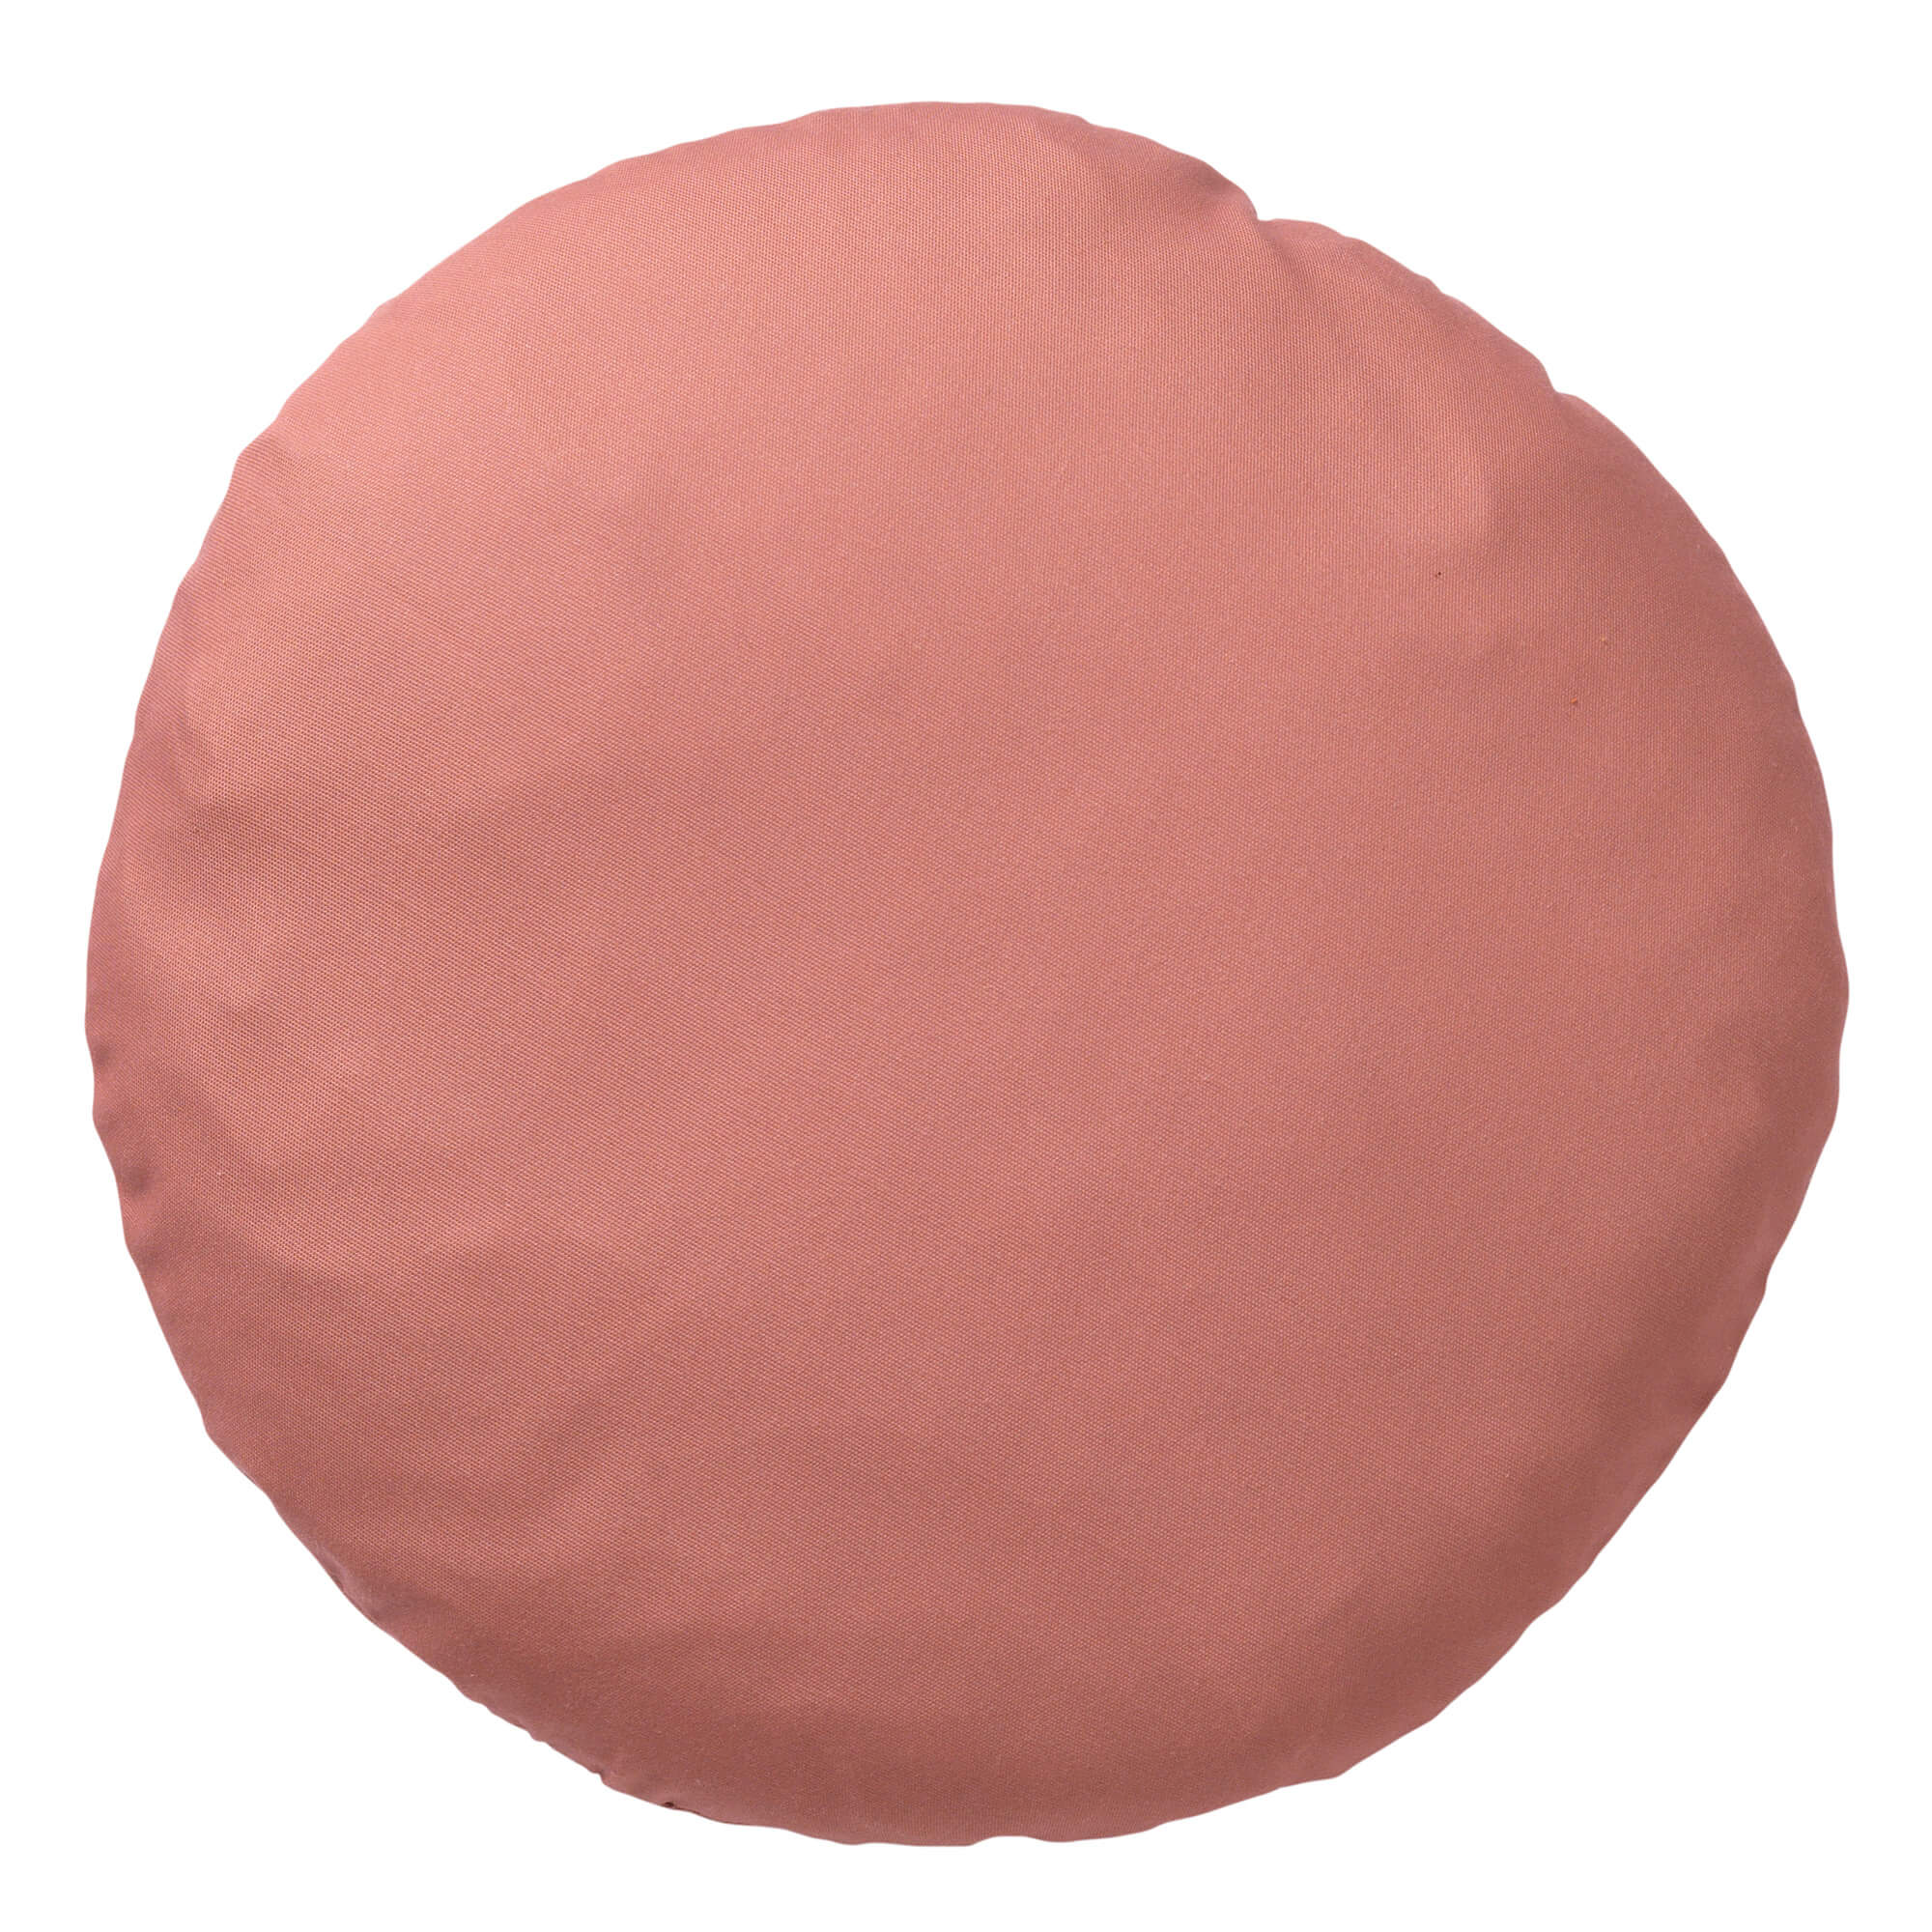 SOL - Buitenkussen rond Ø40 cm - waterafstotend en uv-bestendig - Muted Clay - roze